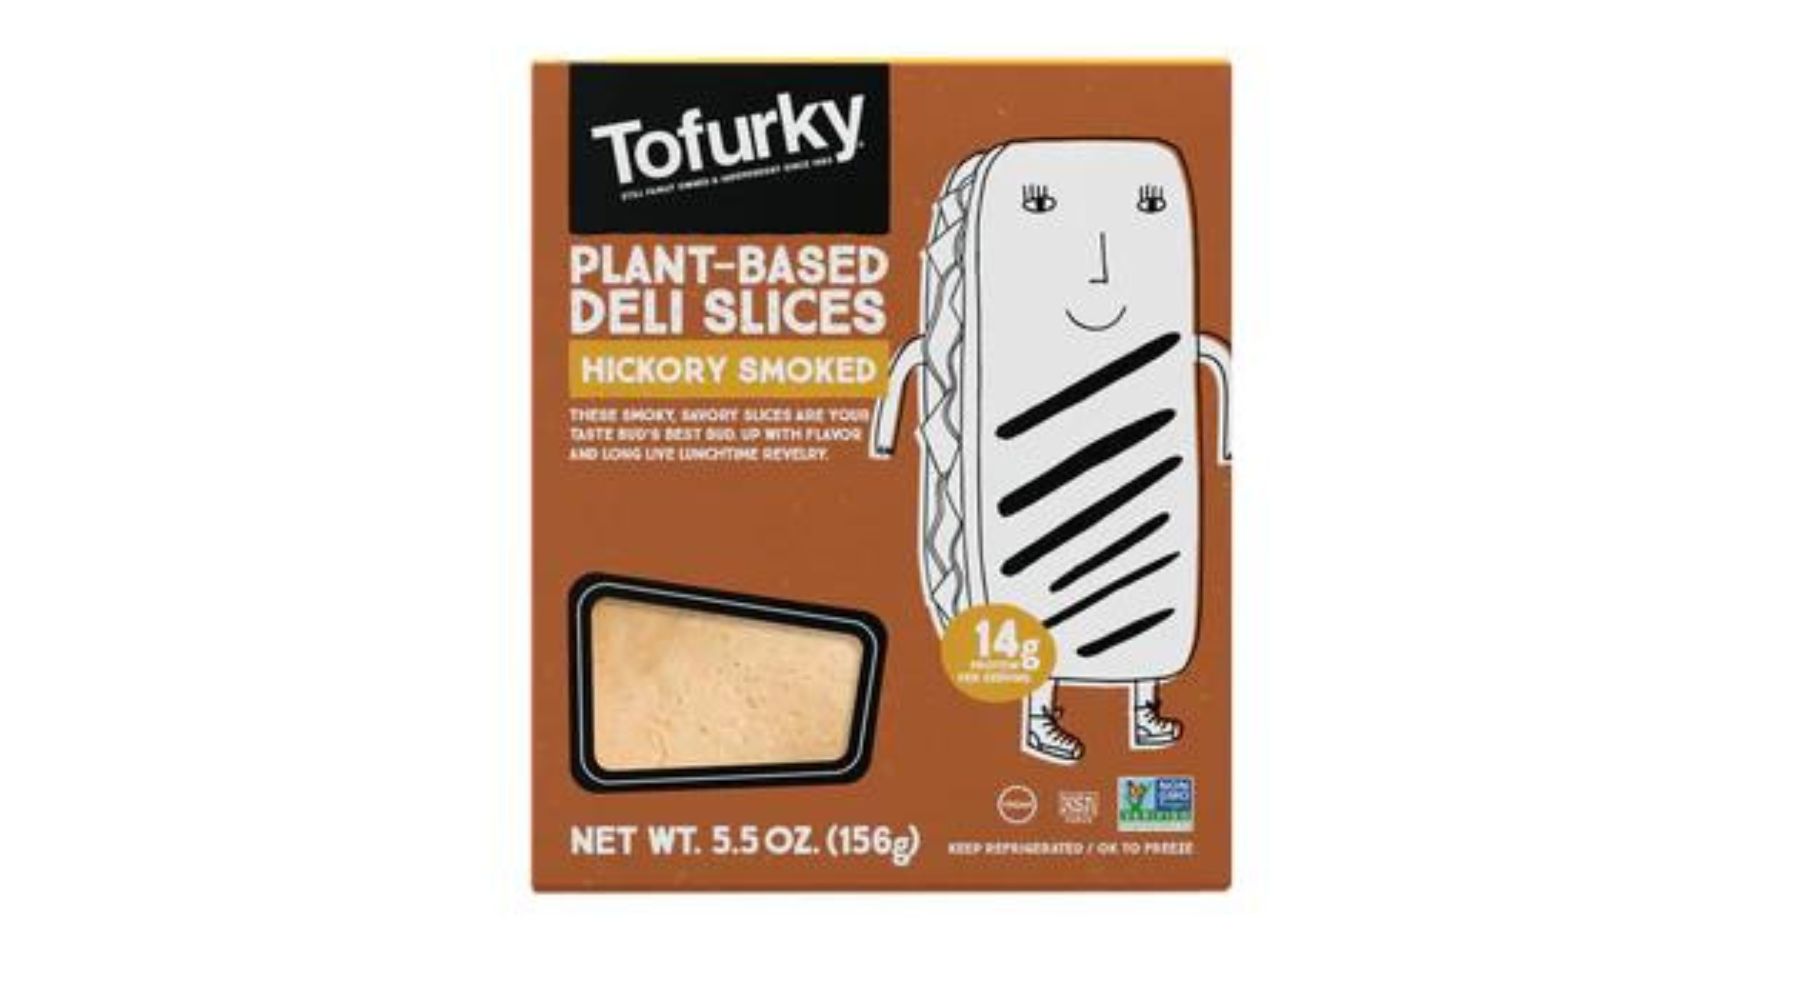 Tofurky Deli Slices - Hickory Smoked